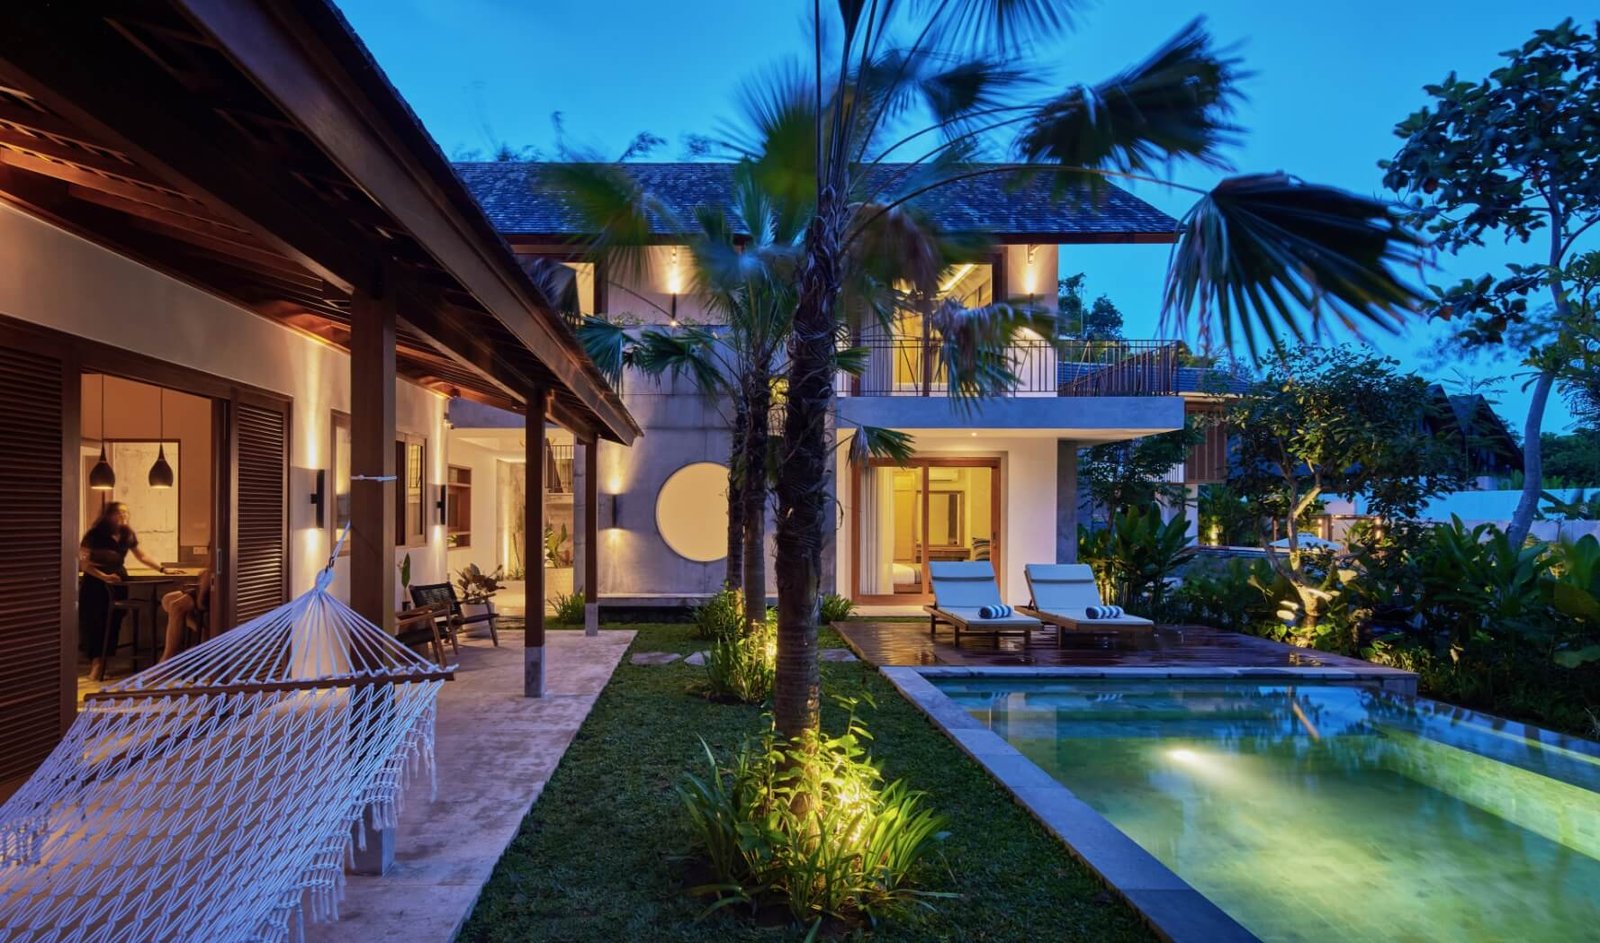 < img src="architecture.jpg" alt="tropical modern villa architecture bali." >